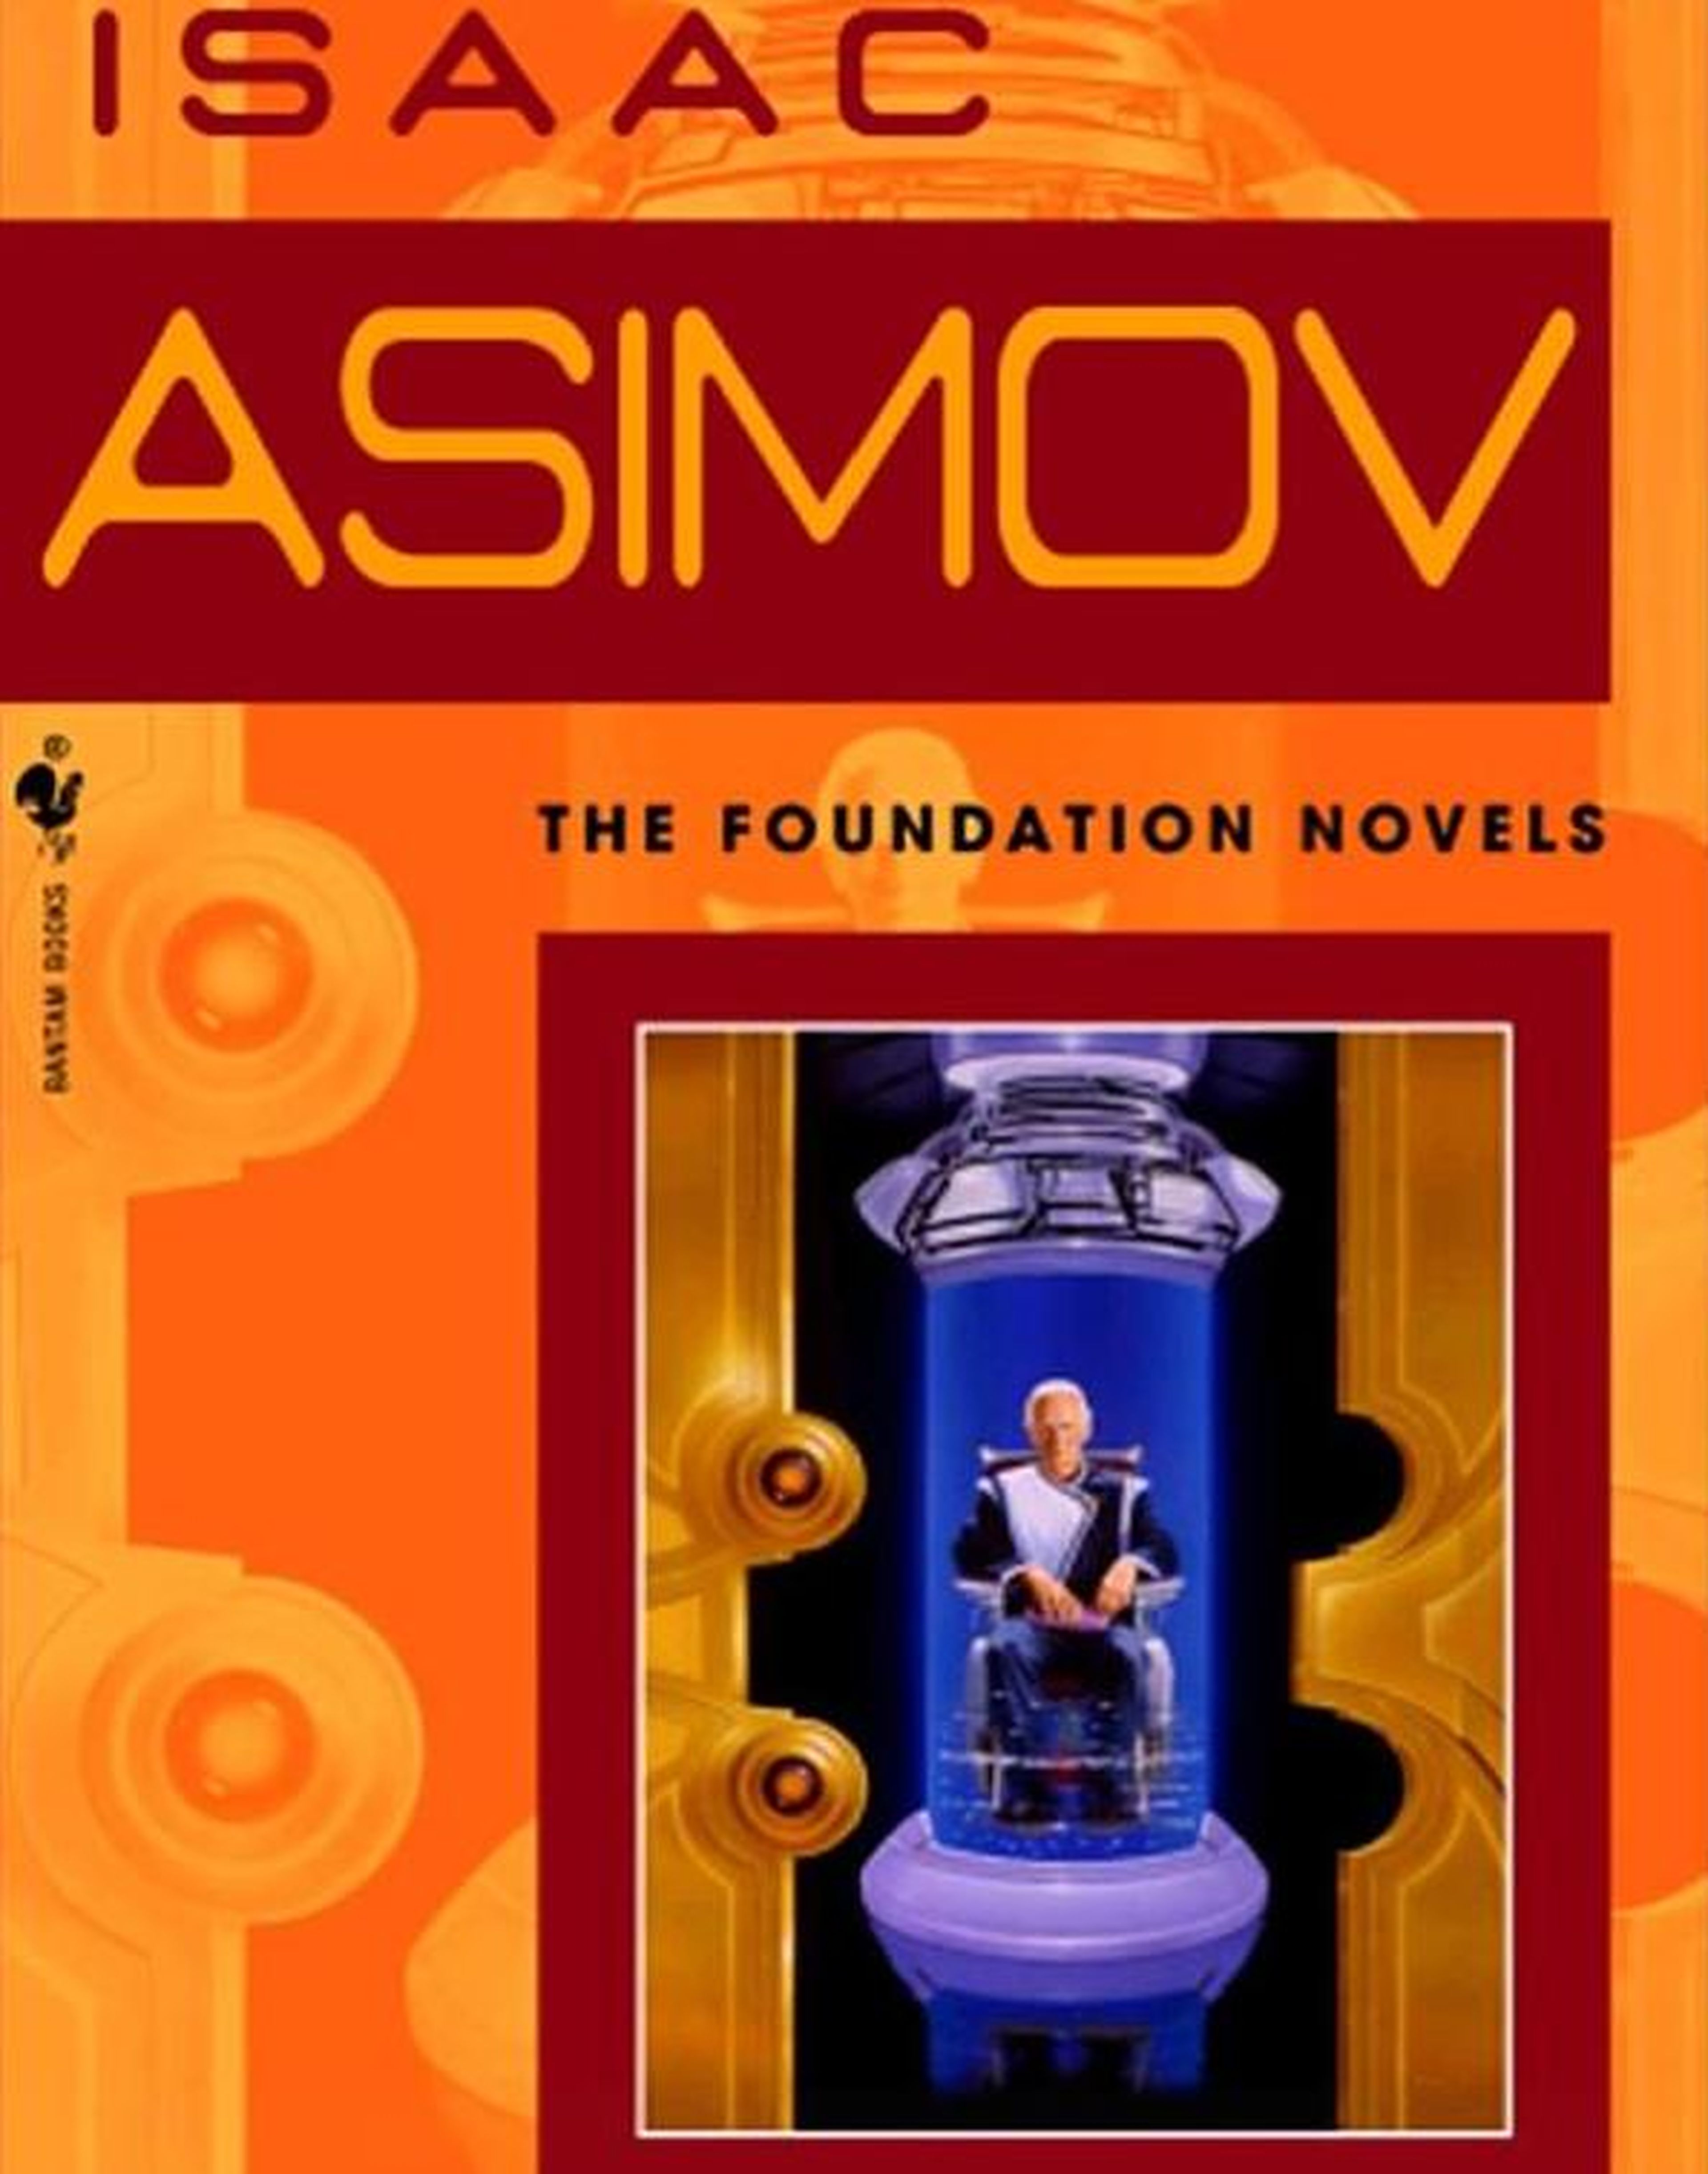 Michio Kaku: The "Foundation" Trilogy by Isaac Asimov